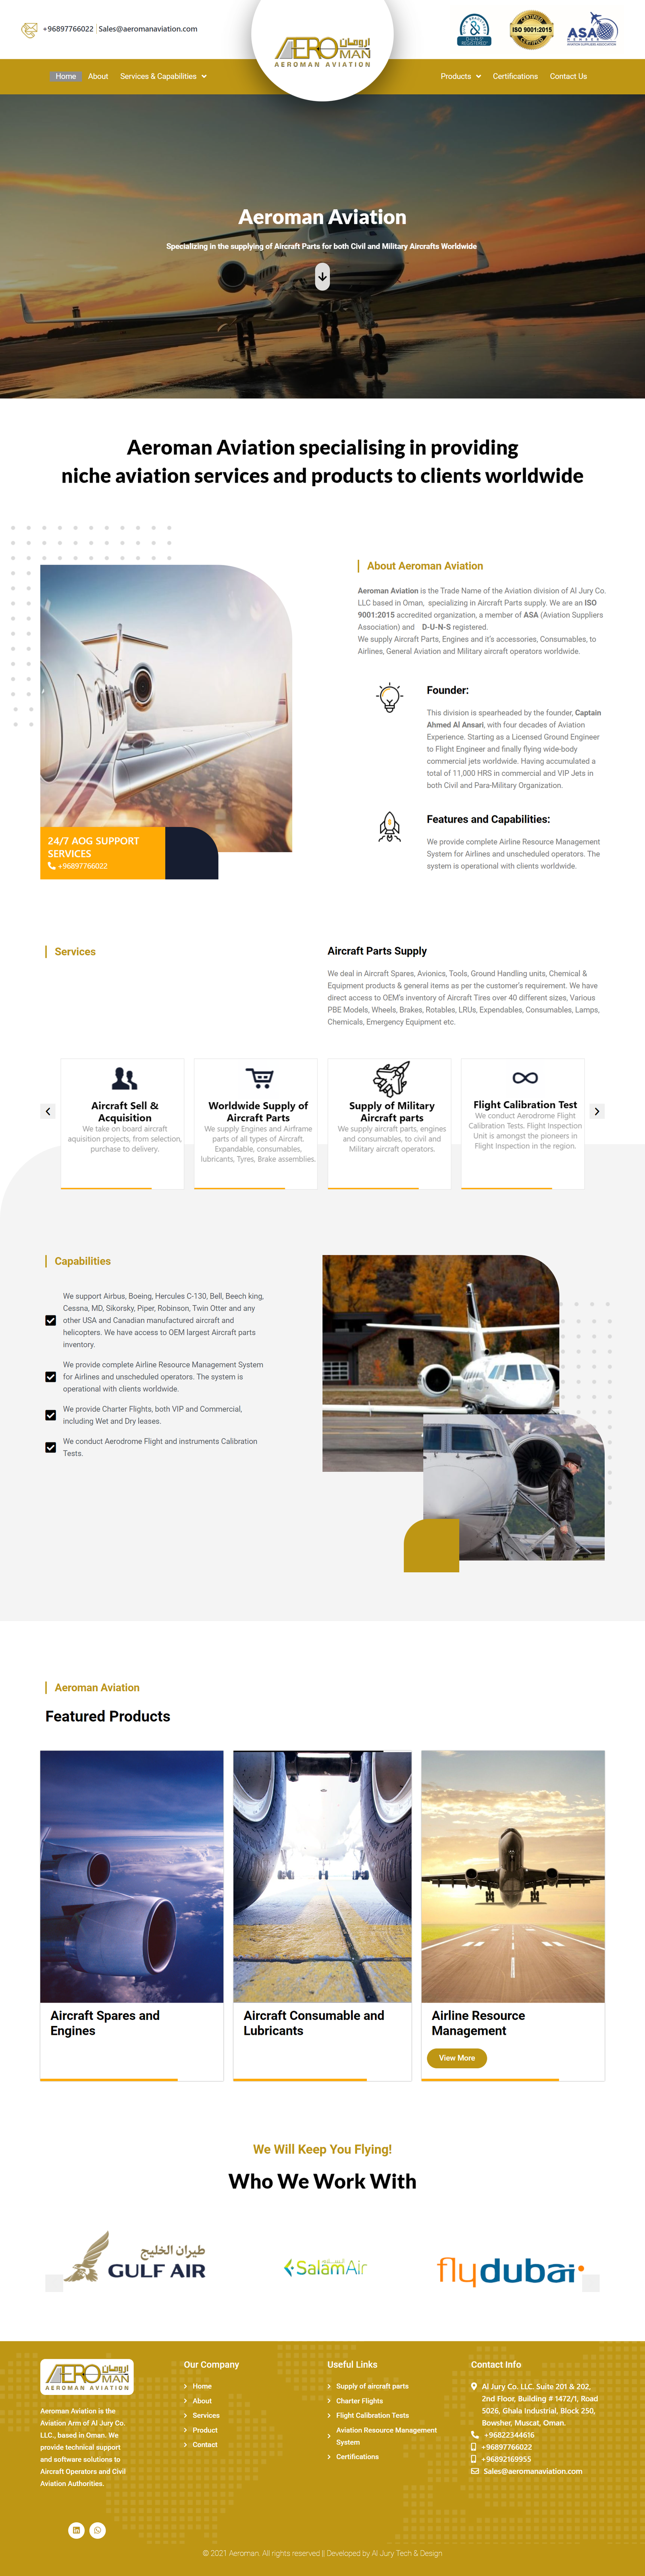 Aeroman Aviation website